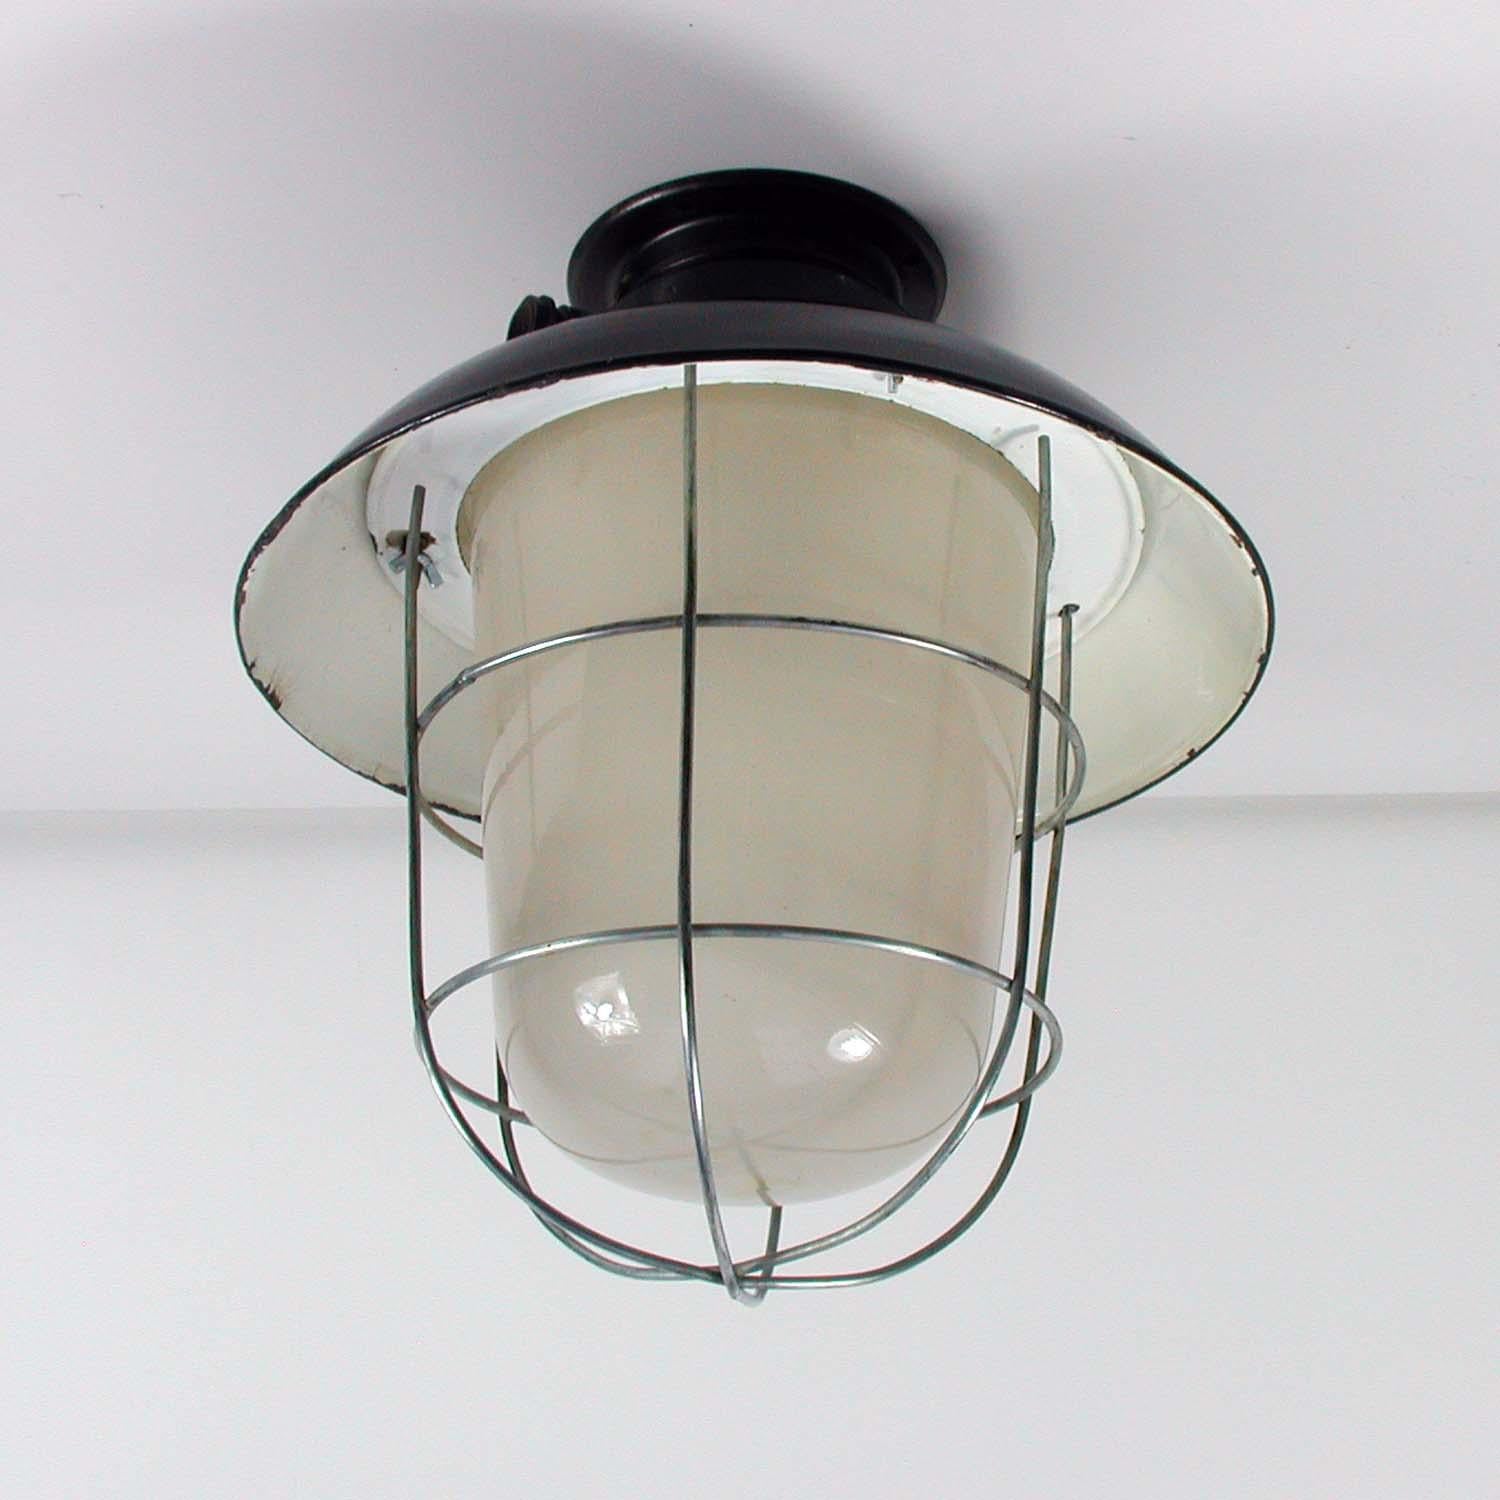 Mid-20th Century Vintage Industrial Enamel & Milk Glass Ceiling Light, Germany, 1950s